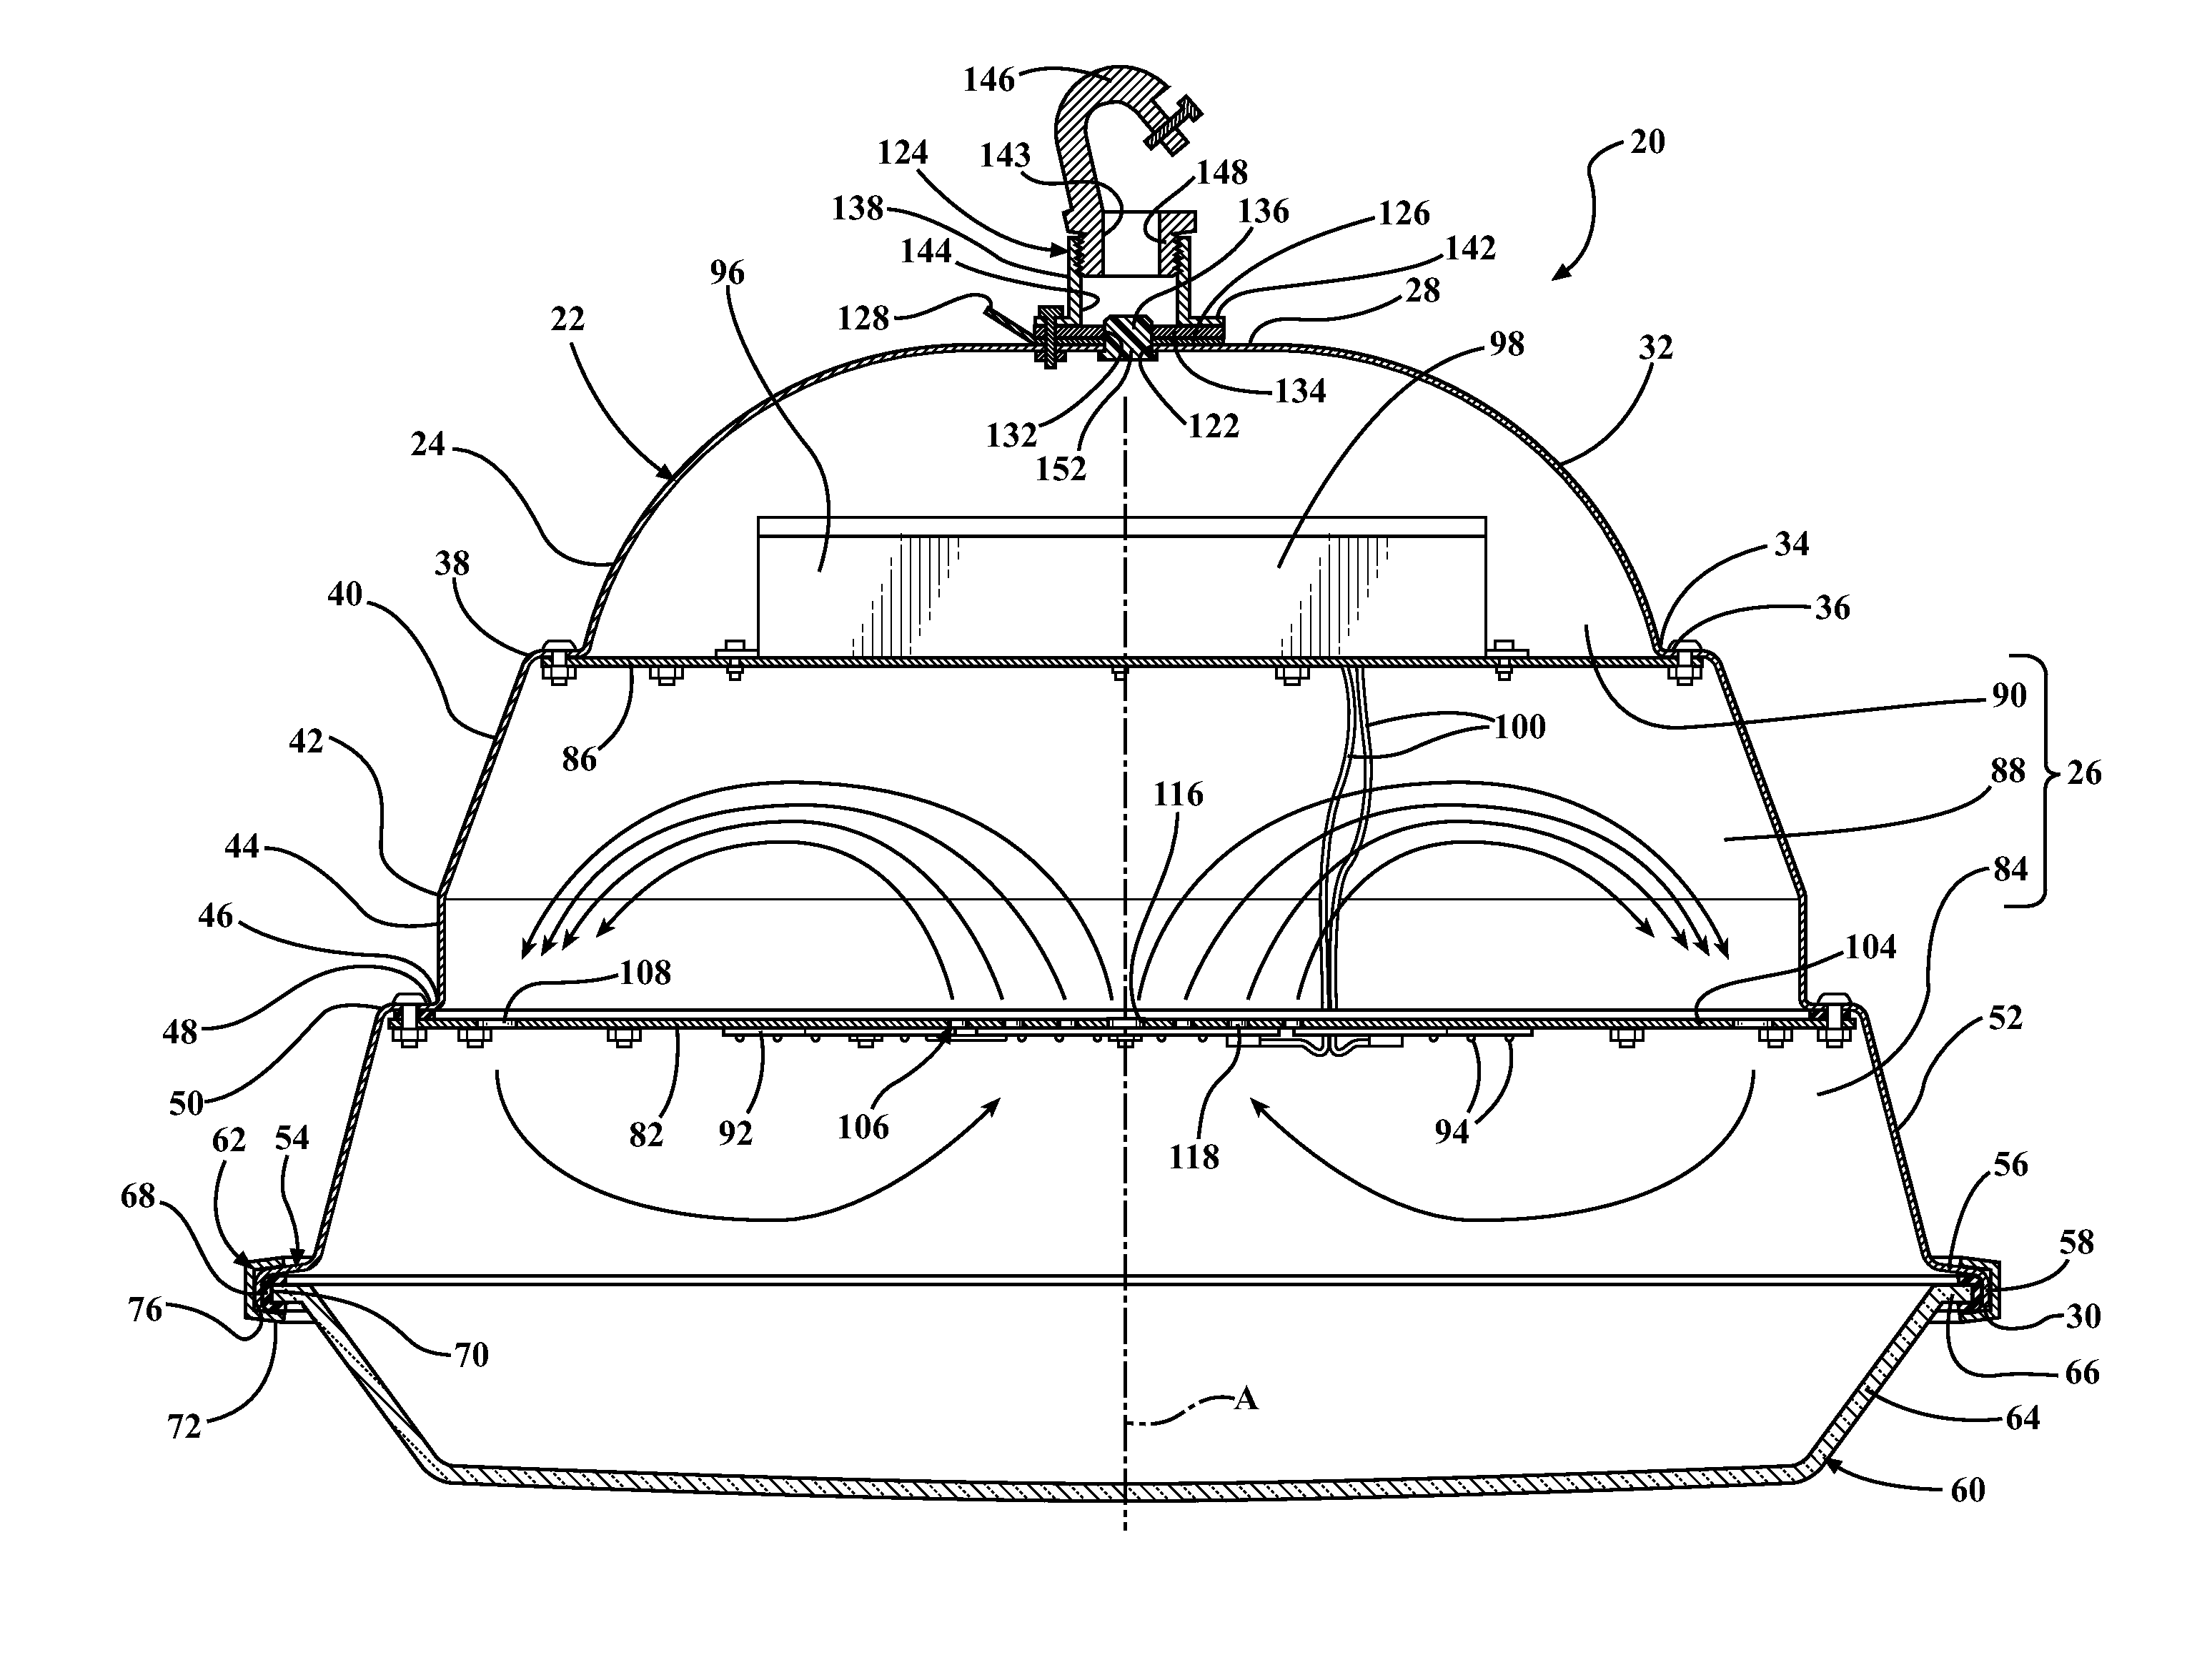 LED heat sink apparatus